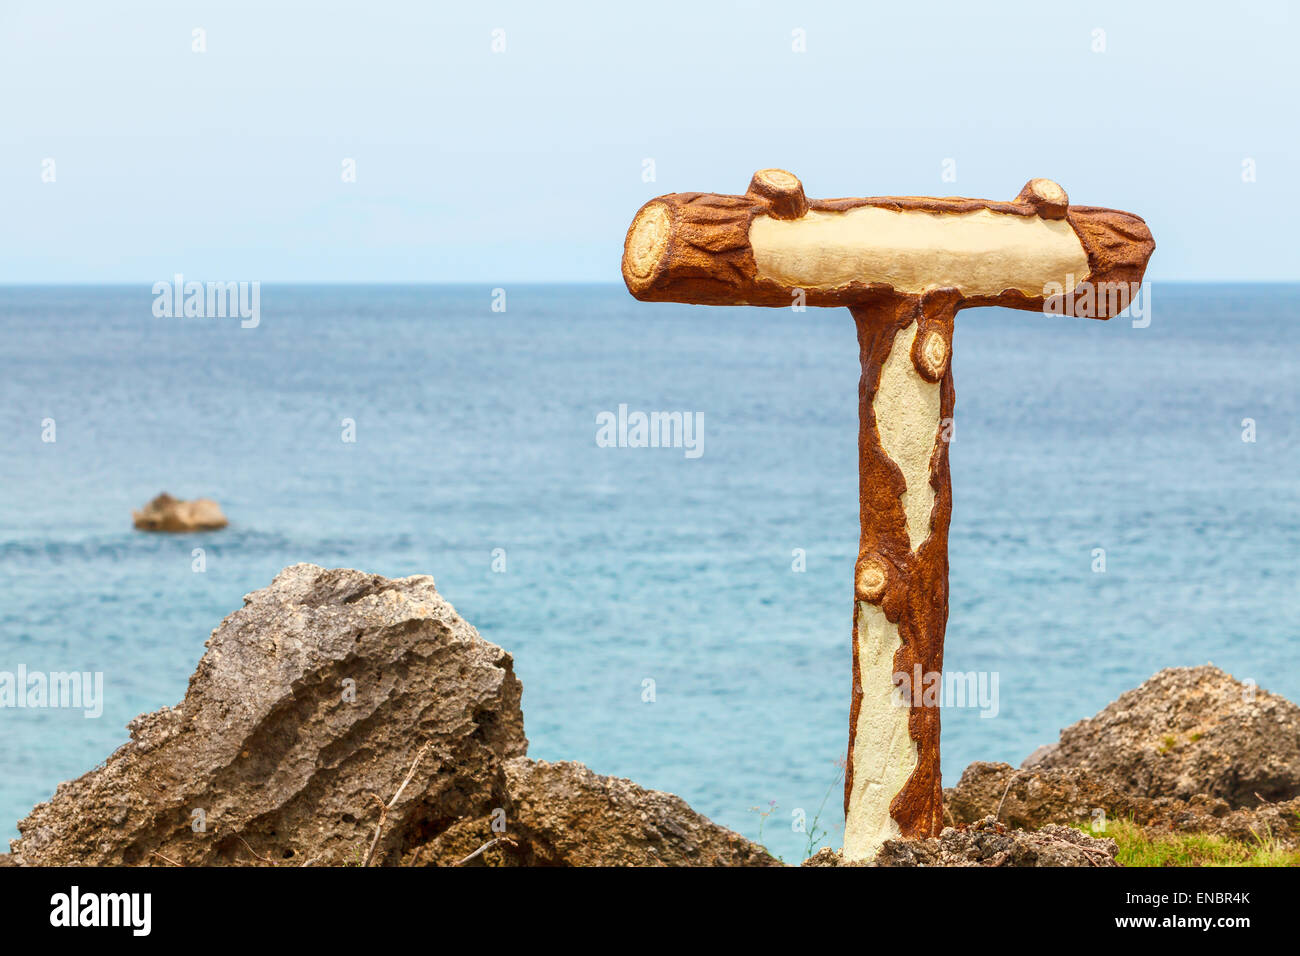 Wood plate table on stone island on tropical sea Stock Photo